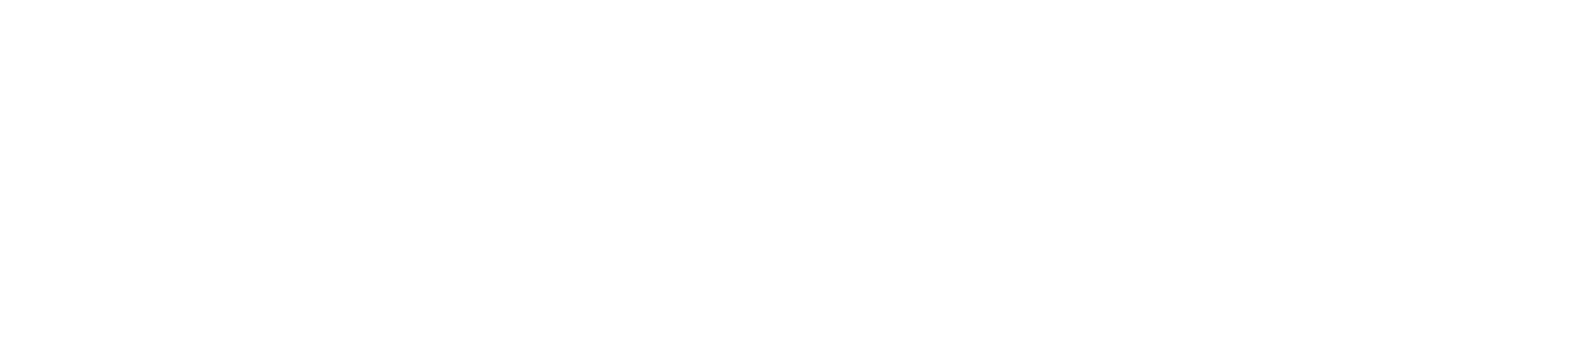 Doubt logo